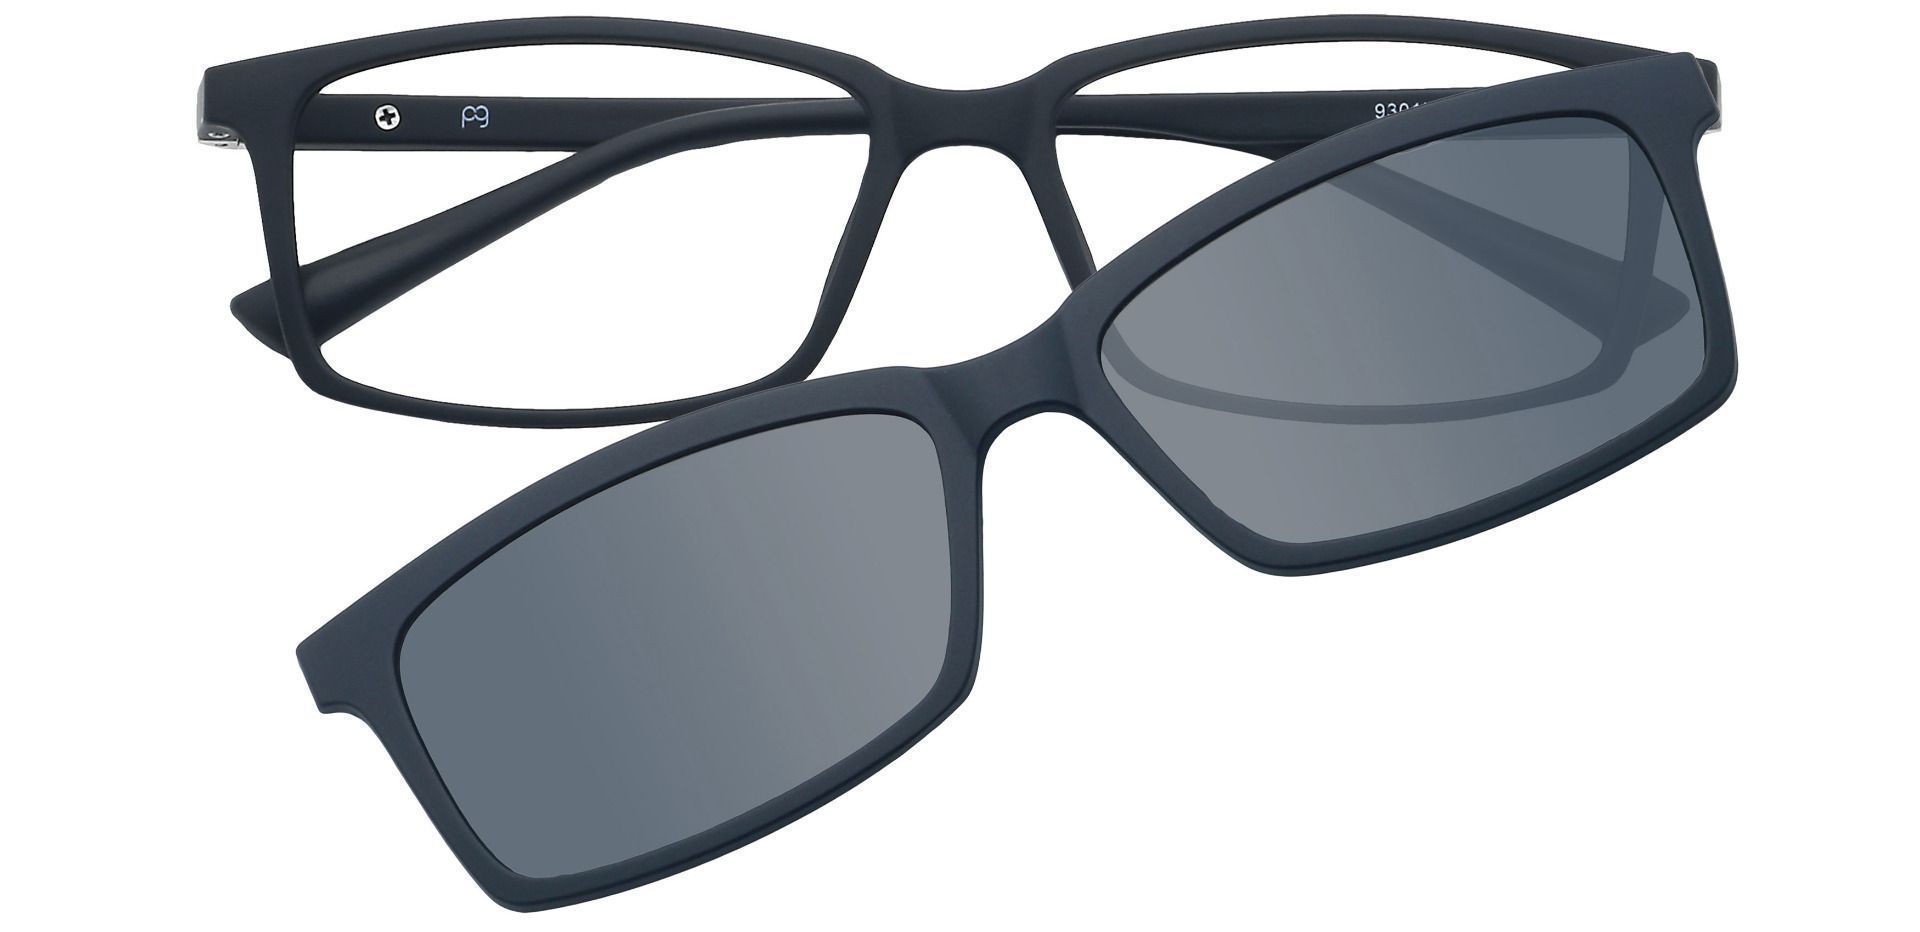 Tahoe Rectangle Non-Rx Glasses - Black